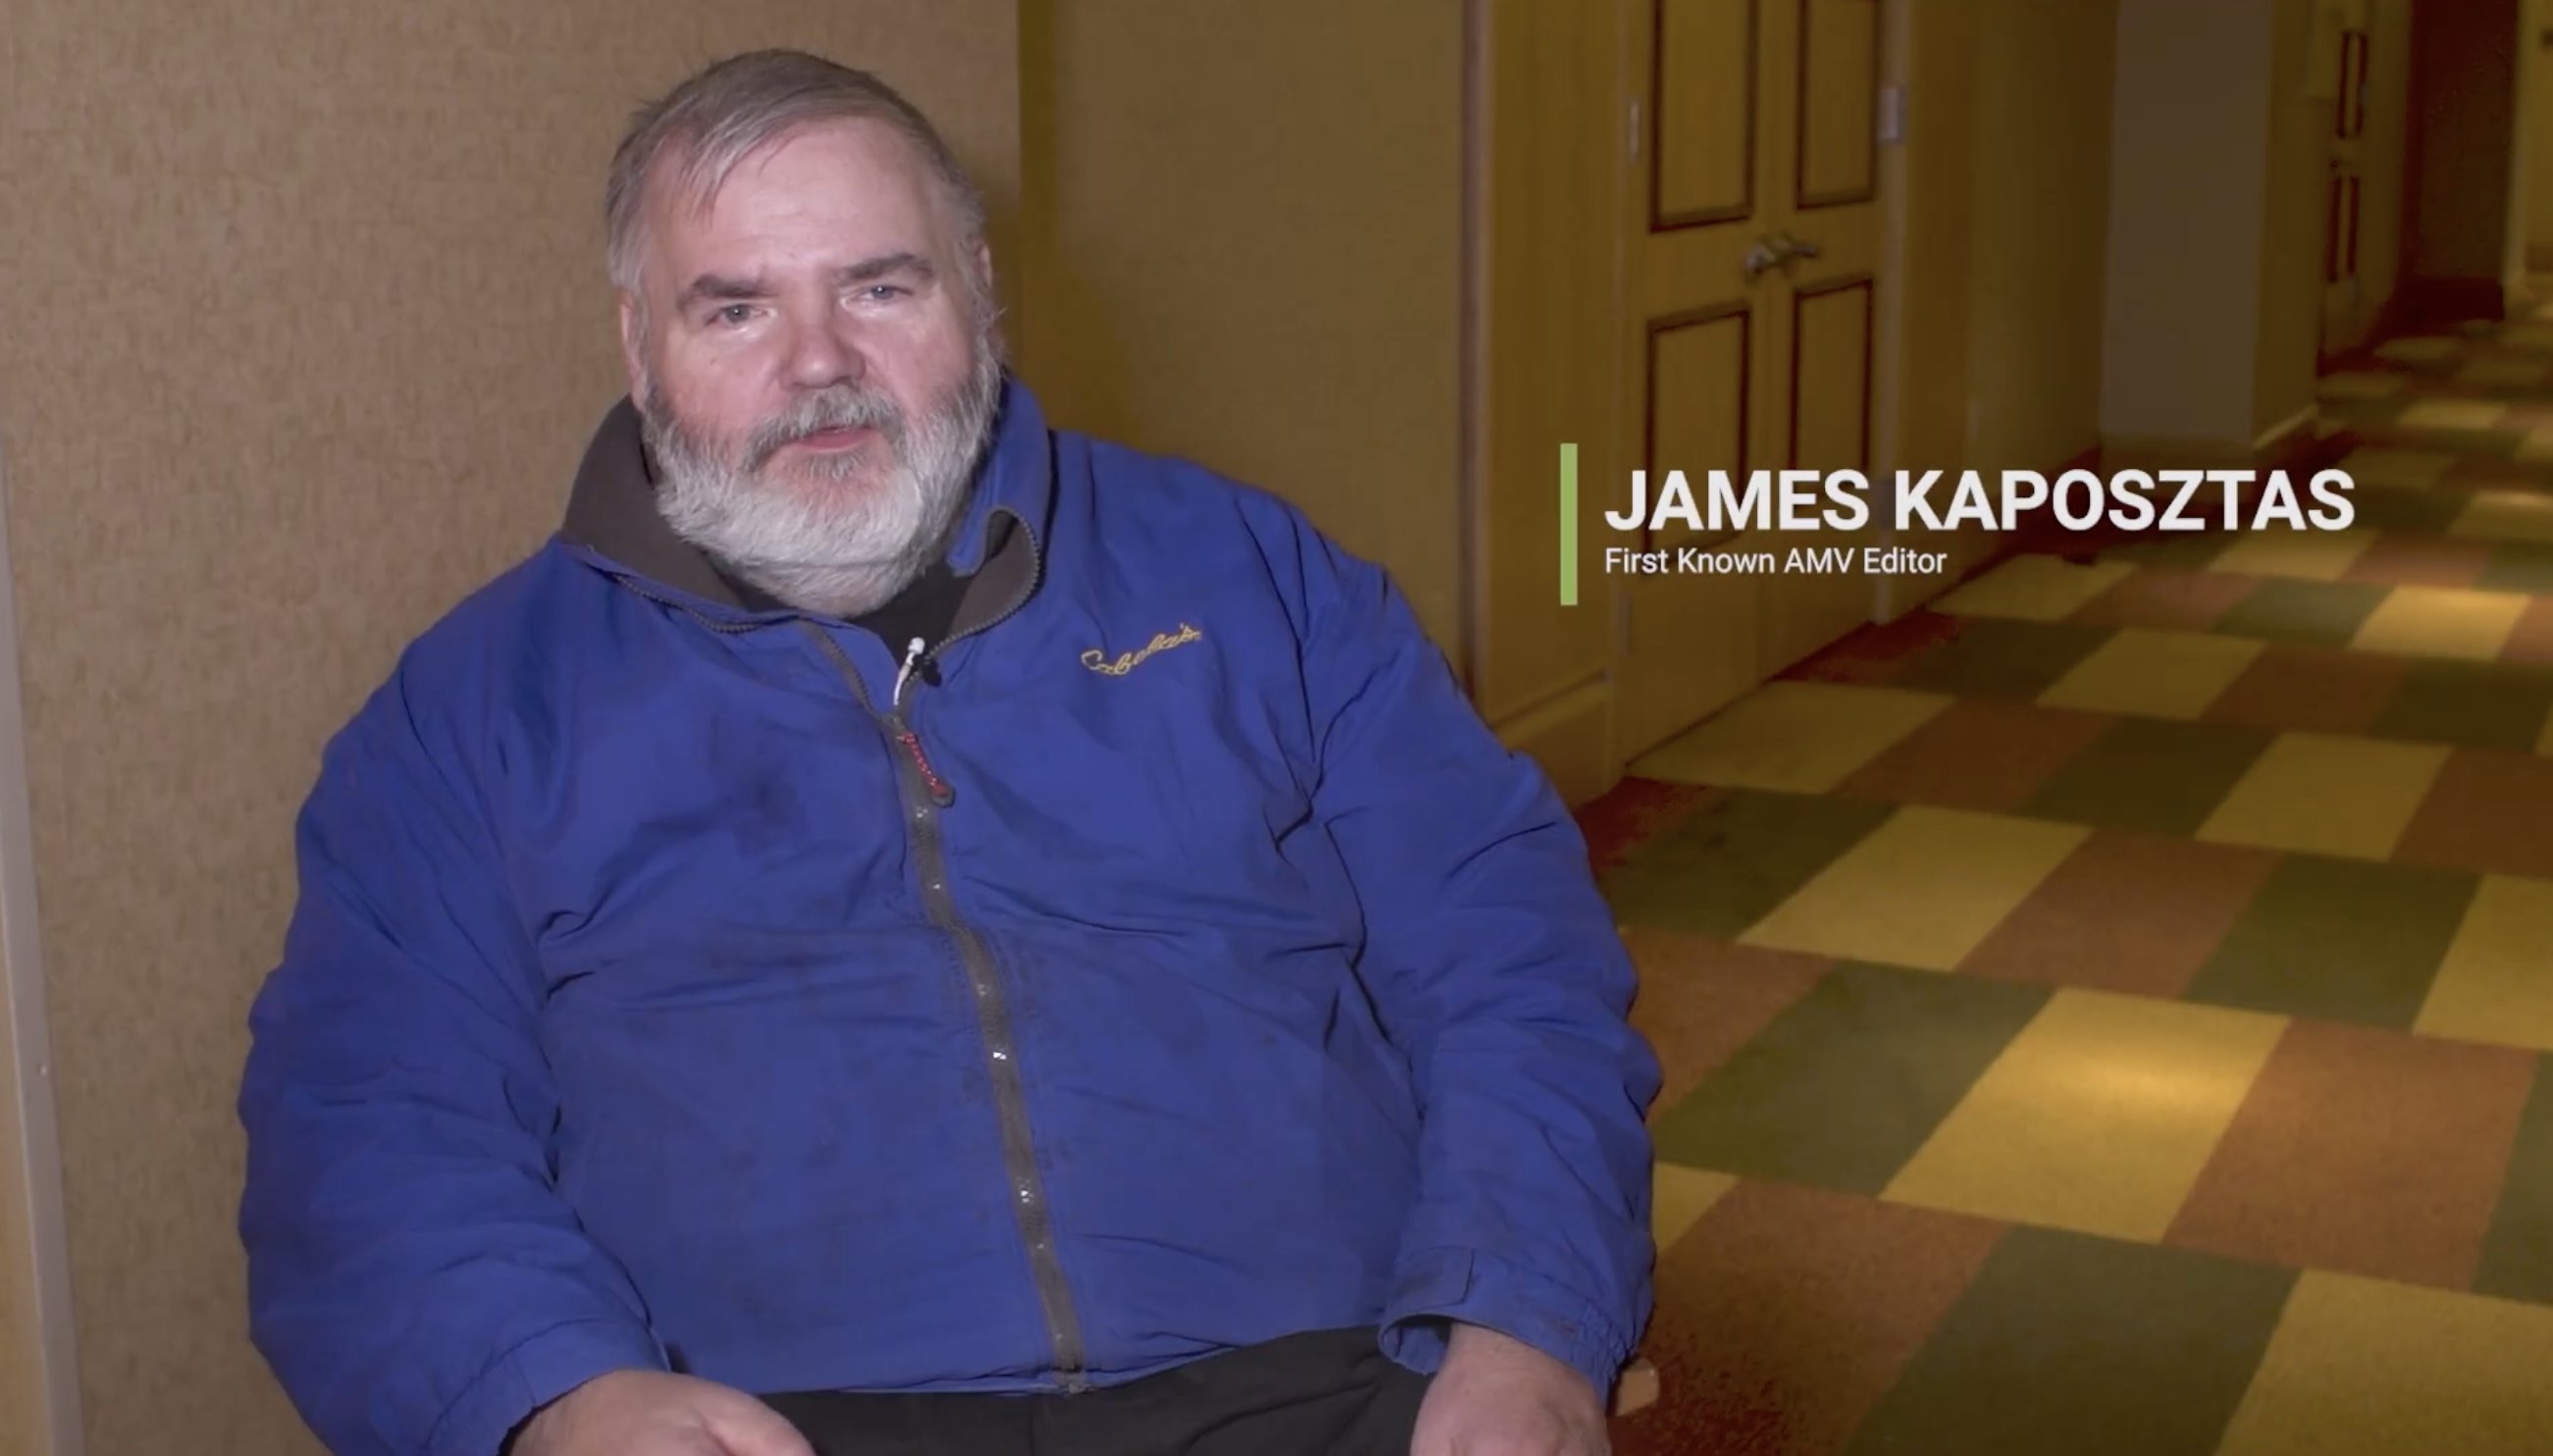 AMV Creator James Kaposztas Has Passed Away